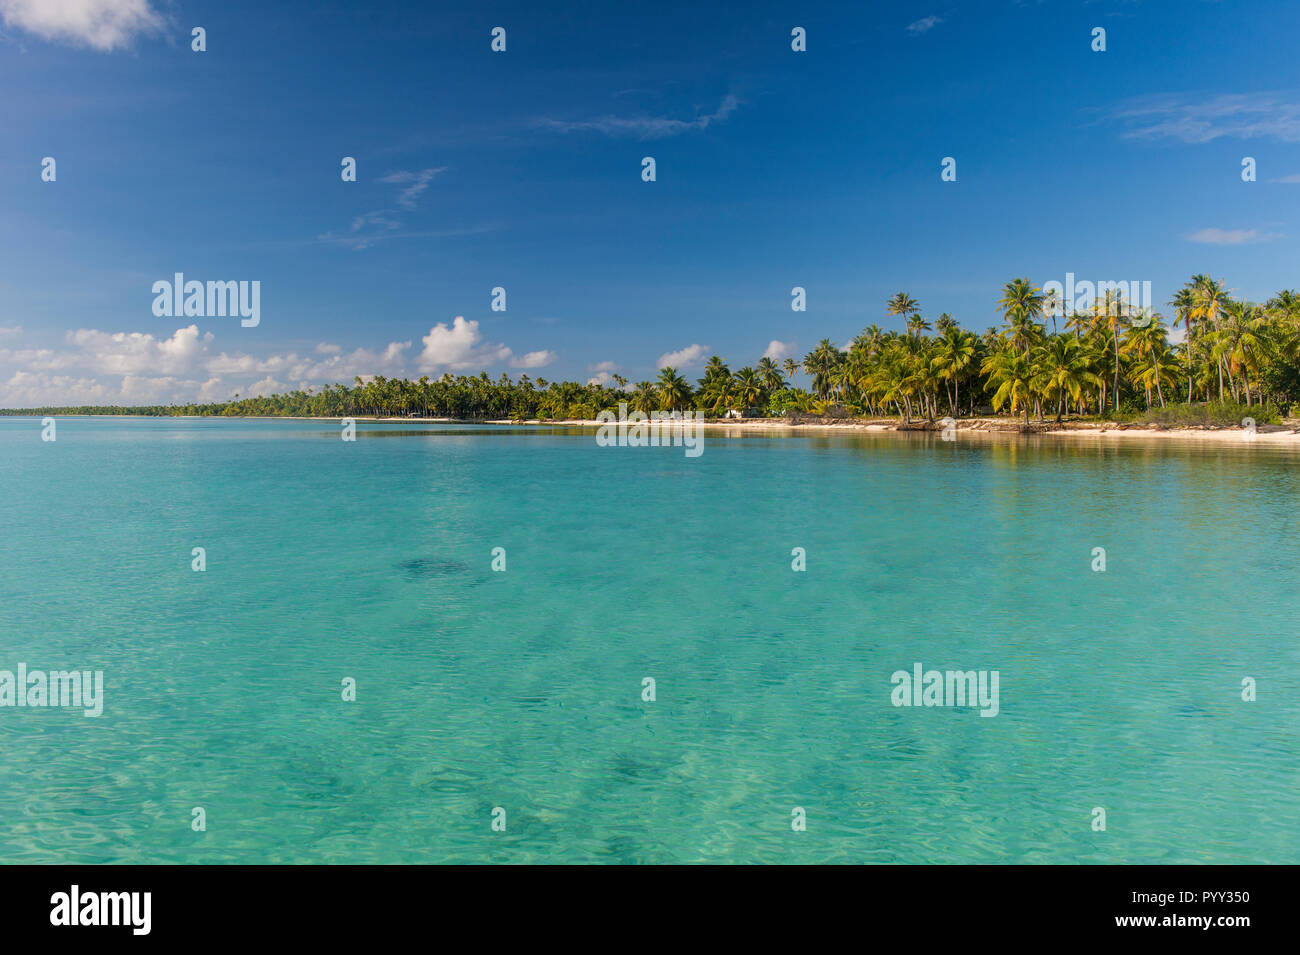 Palm fringed sandy beach in the turquoise waters of Tikehau, Tuamotu Archipelago, French Polynesia Stock Photo